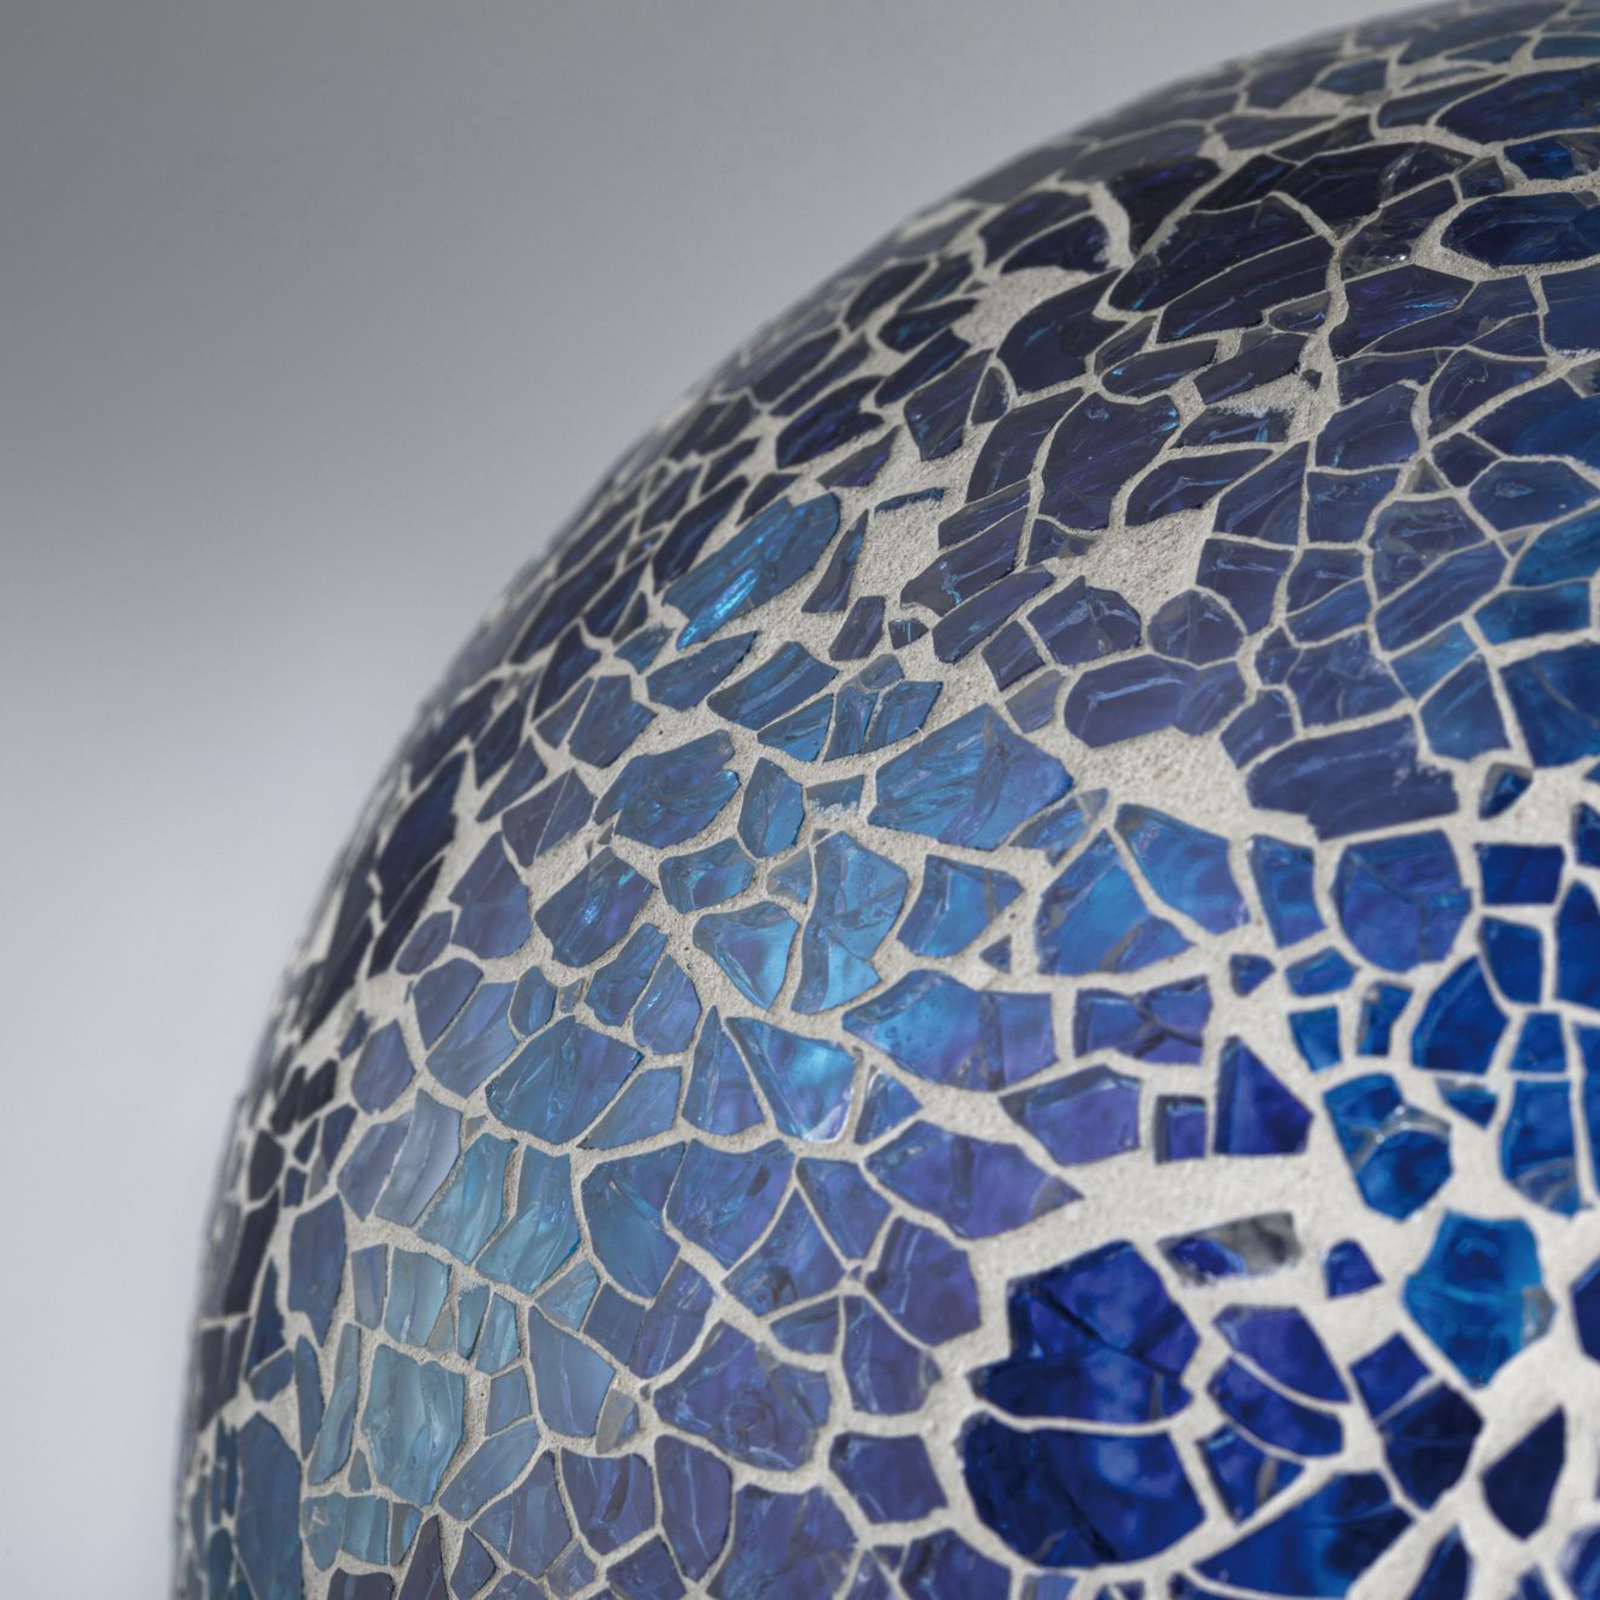 Paulmann E27 LED Globe 5W Miracle Mosaic blauw